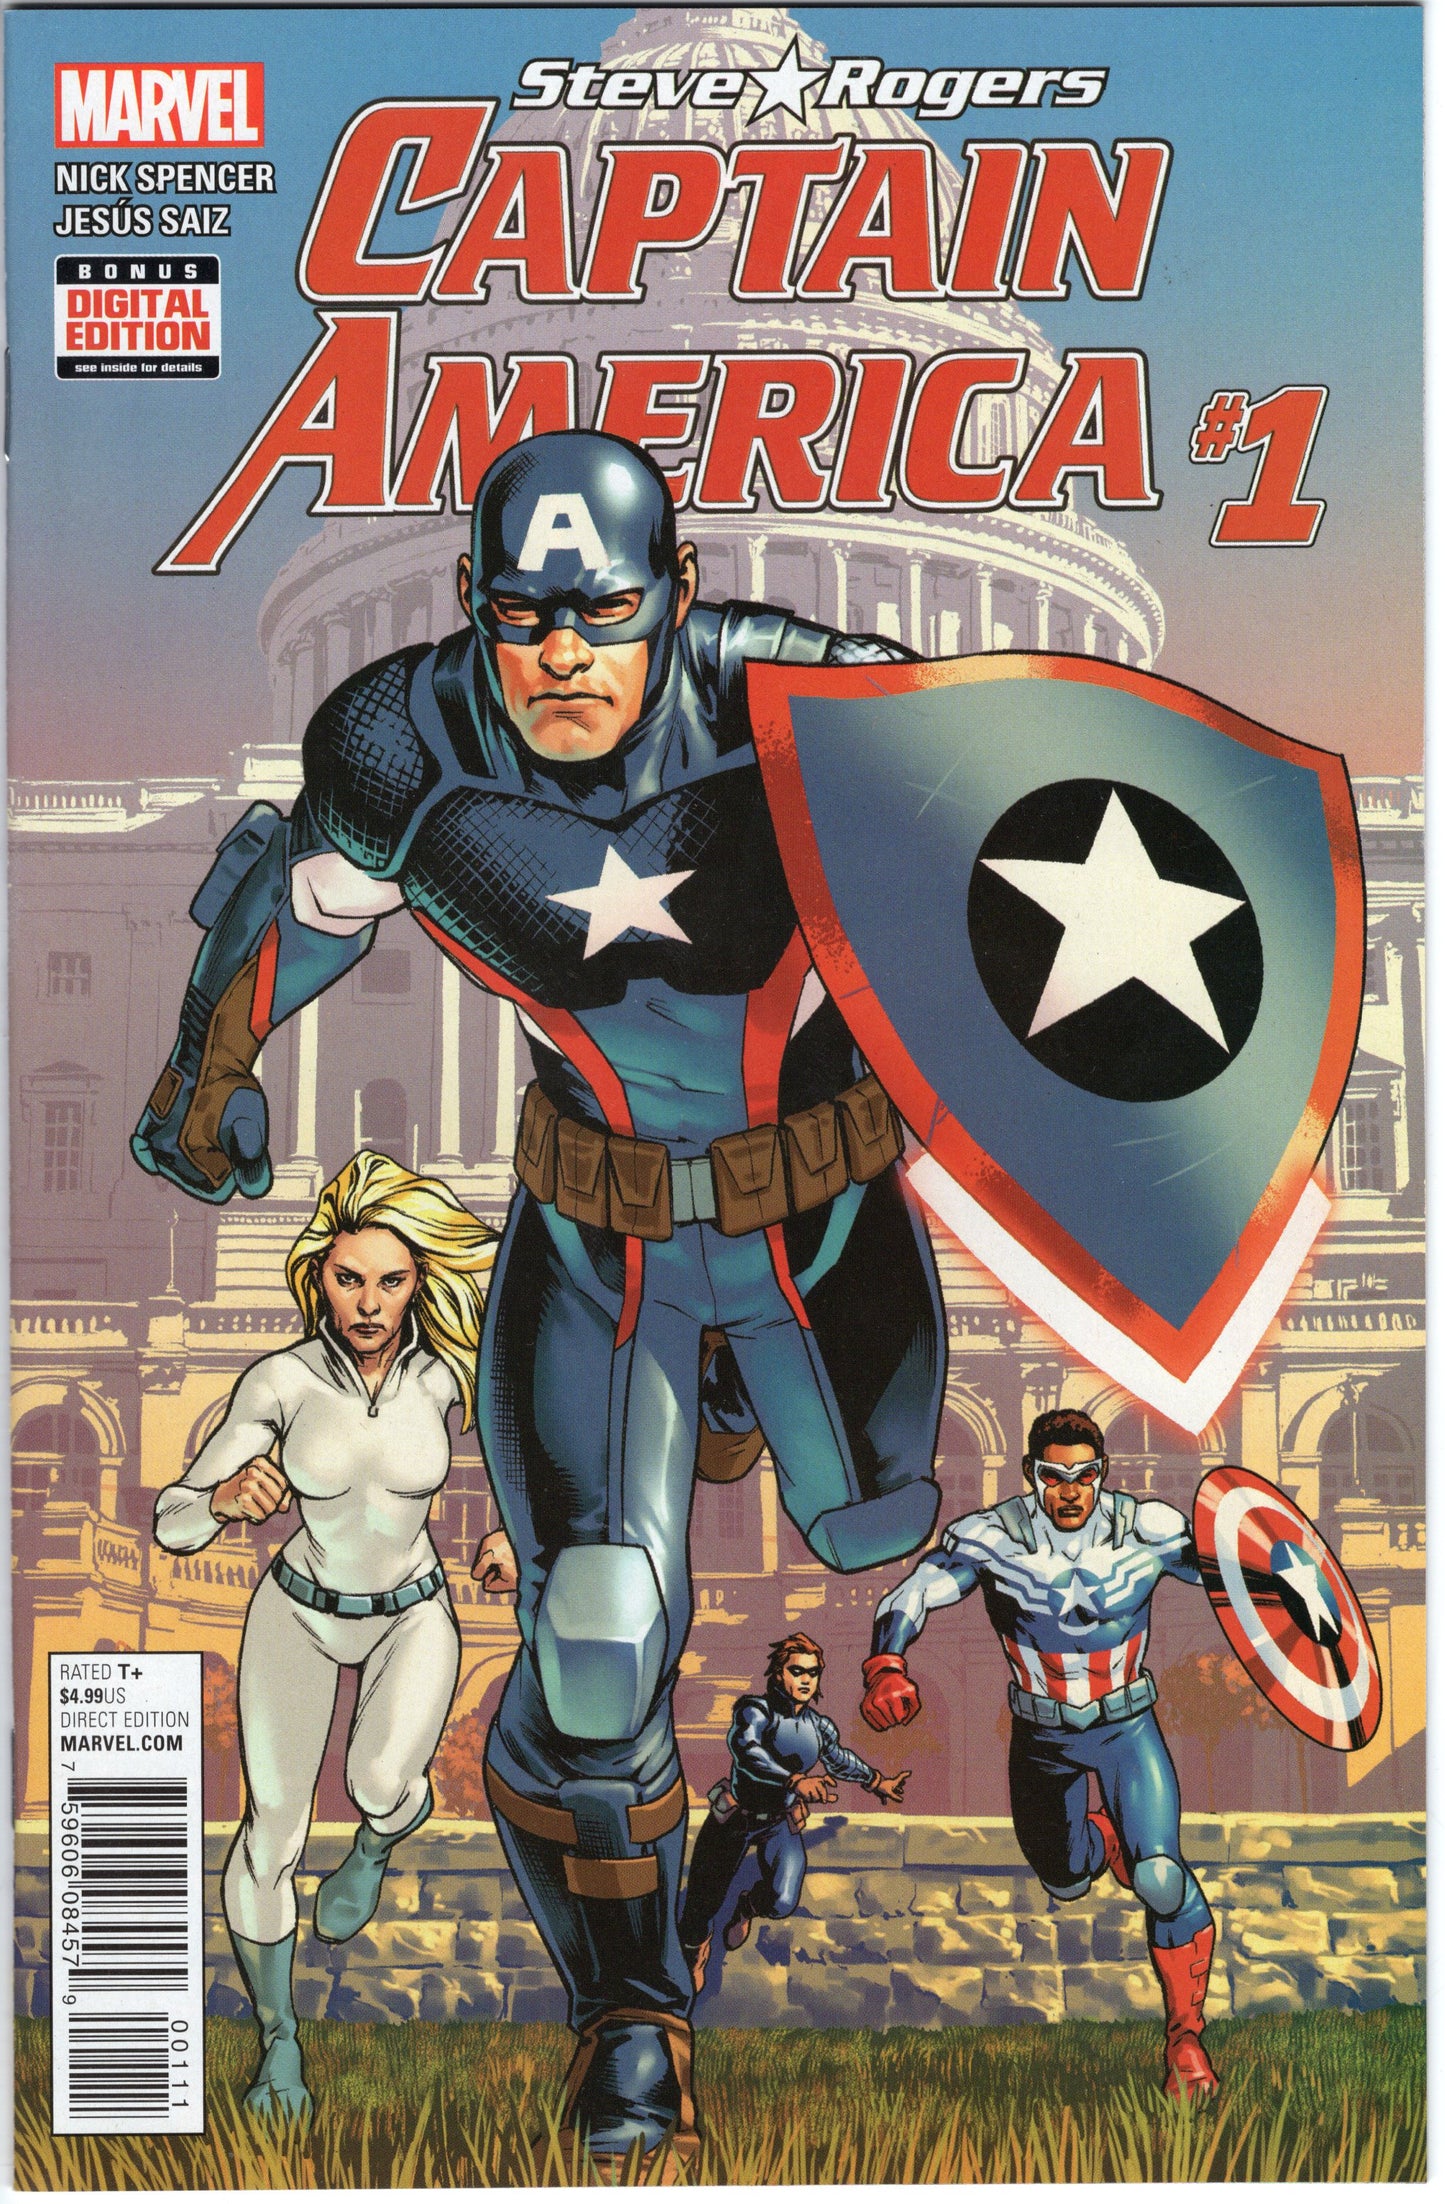 Captain America "Steve Rogers" - Issue #1 (July, 2016 - Marvel Comics) NM